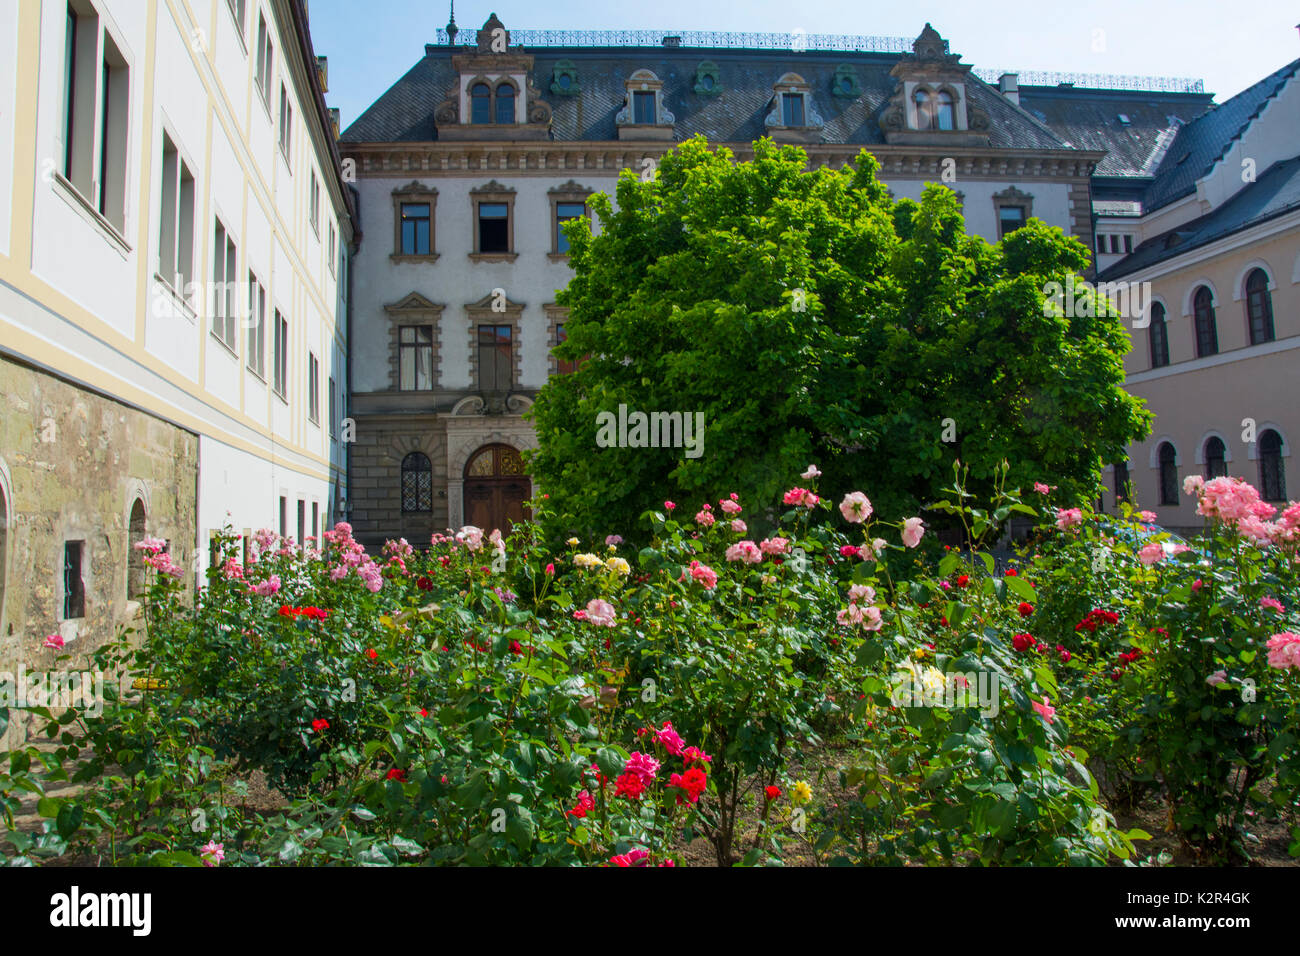 Schloss St Emmeram, palazzo della nobile Thurn und Taxis family, Regensburg, Germania Foto Stock